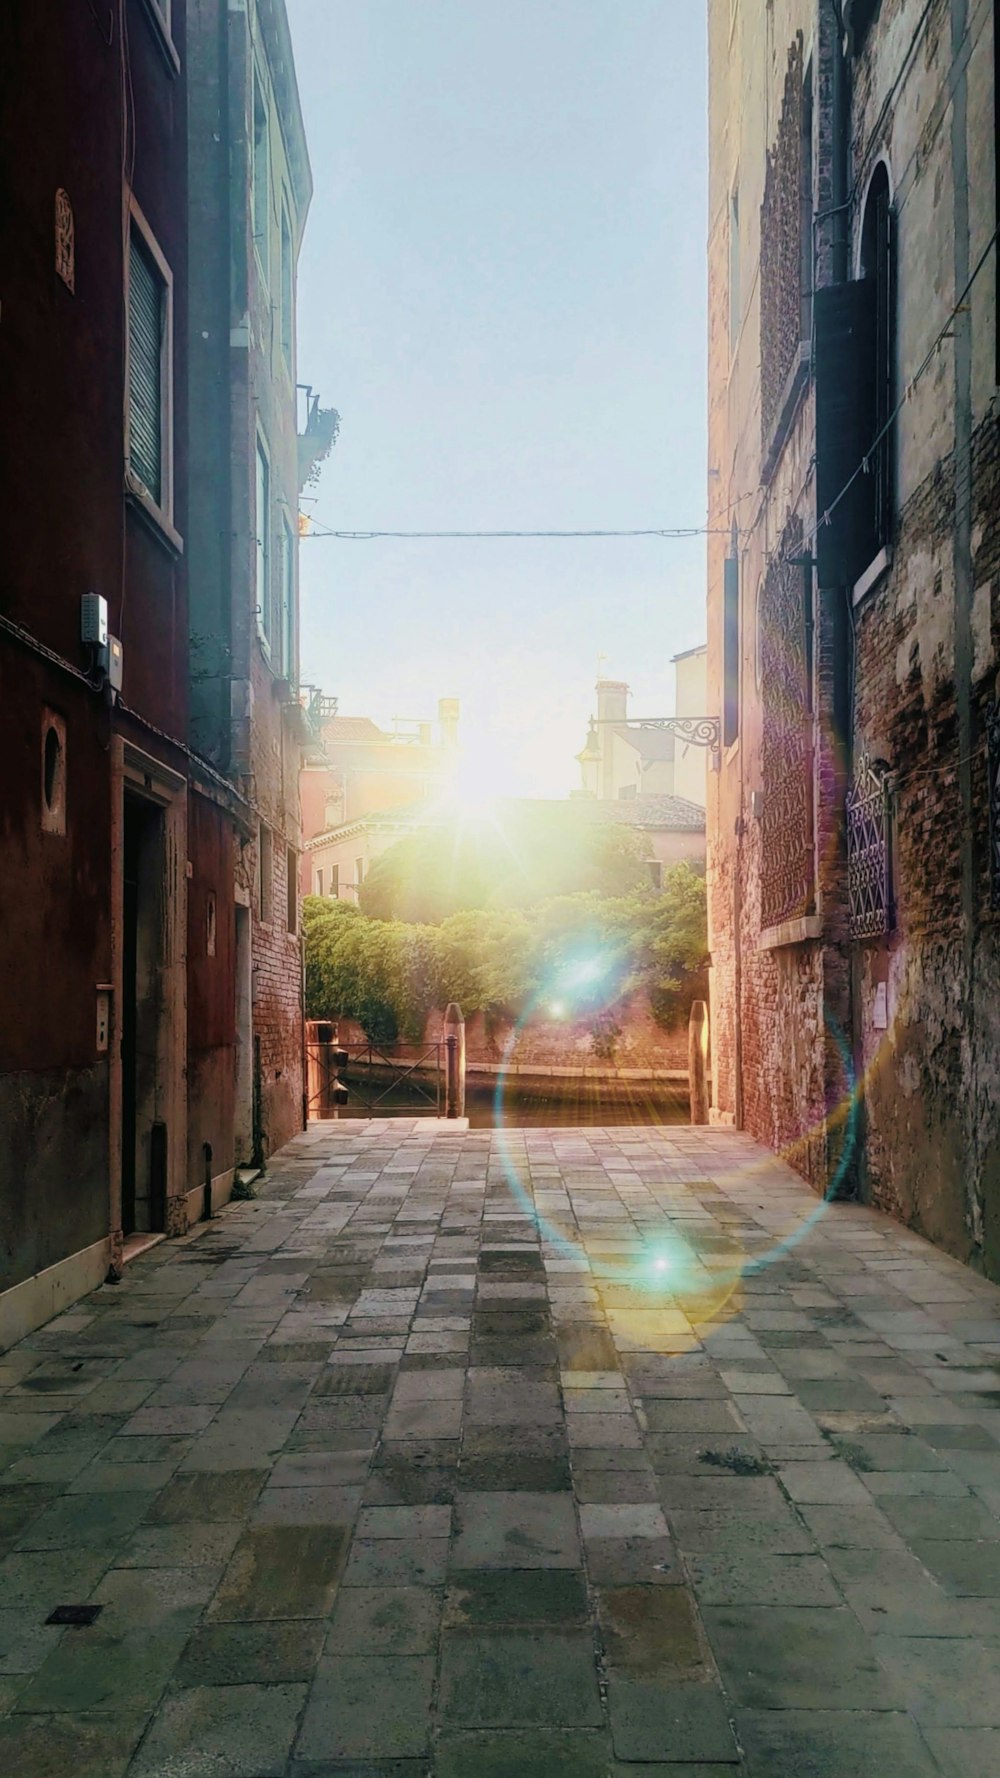 the sun is shining down on a narrow street